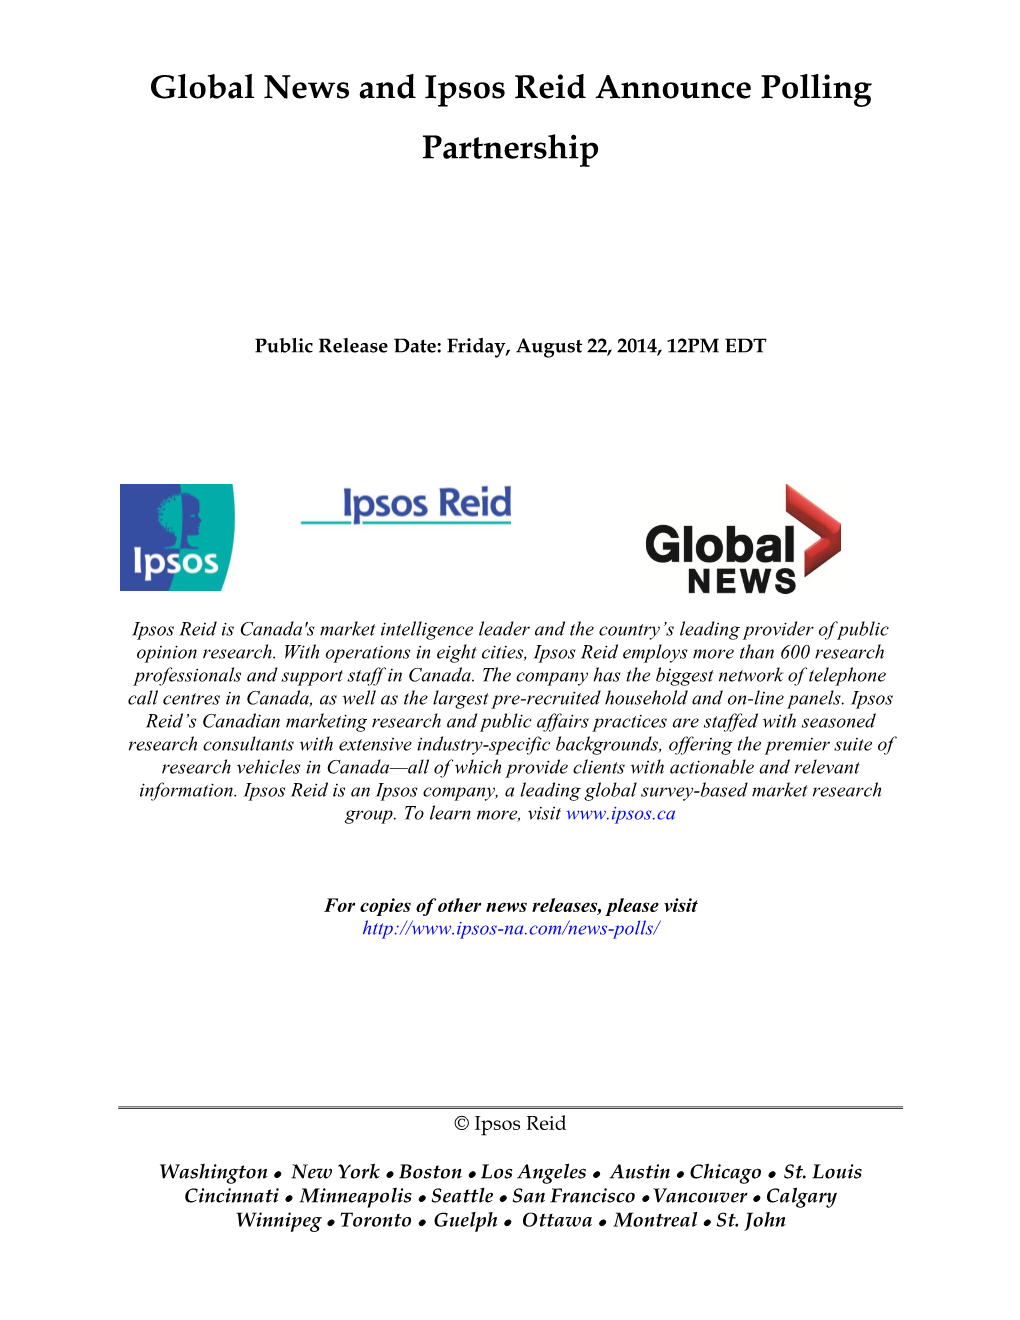 Global News and Ipsos Reid Announce Polling Partnership